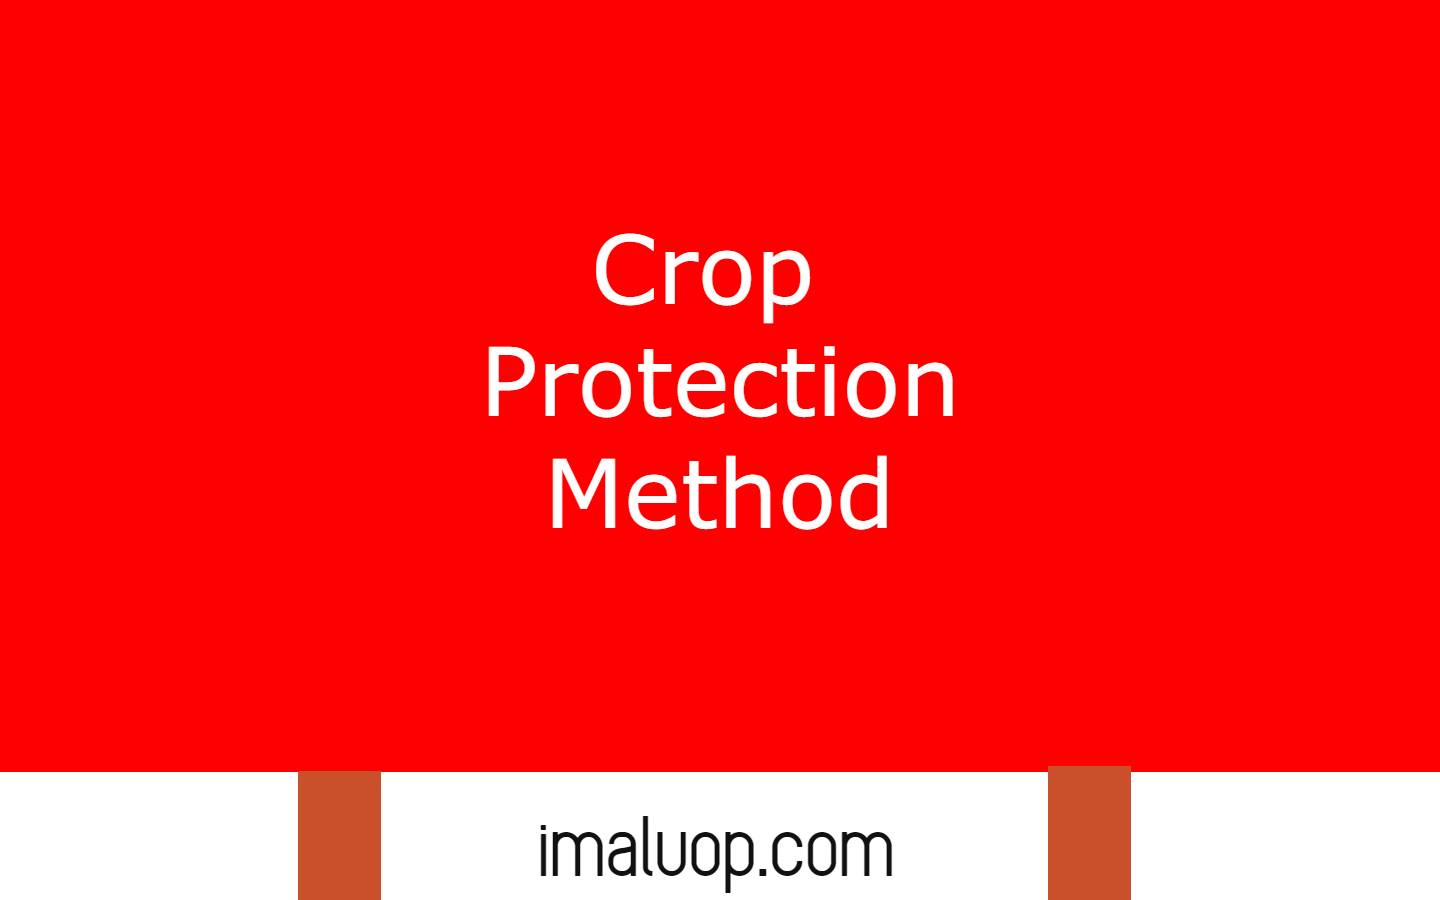 Crop Protection Method